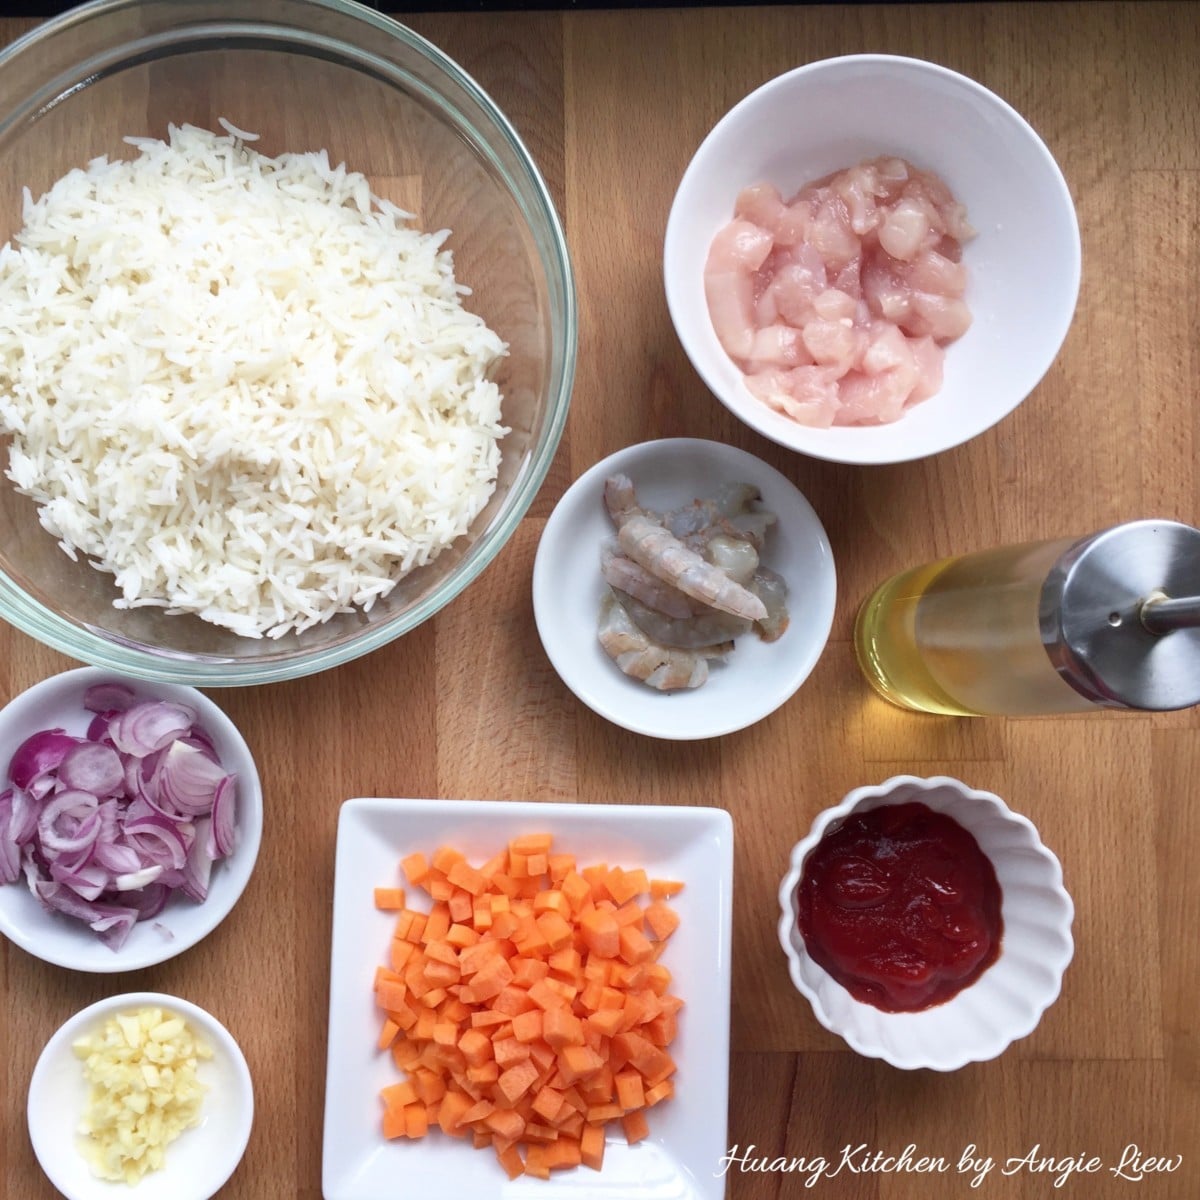 Ingredients for pattaya fried rice.